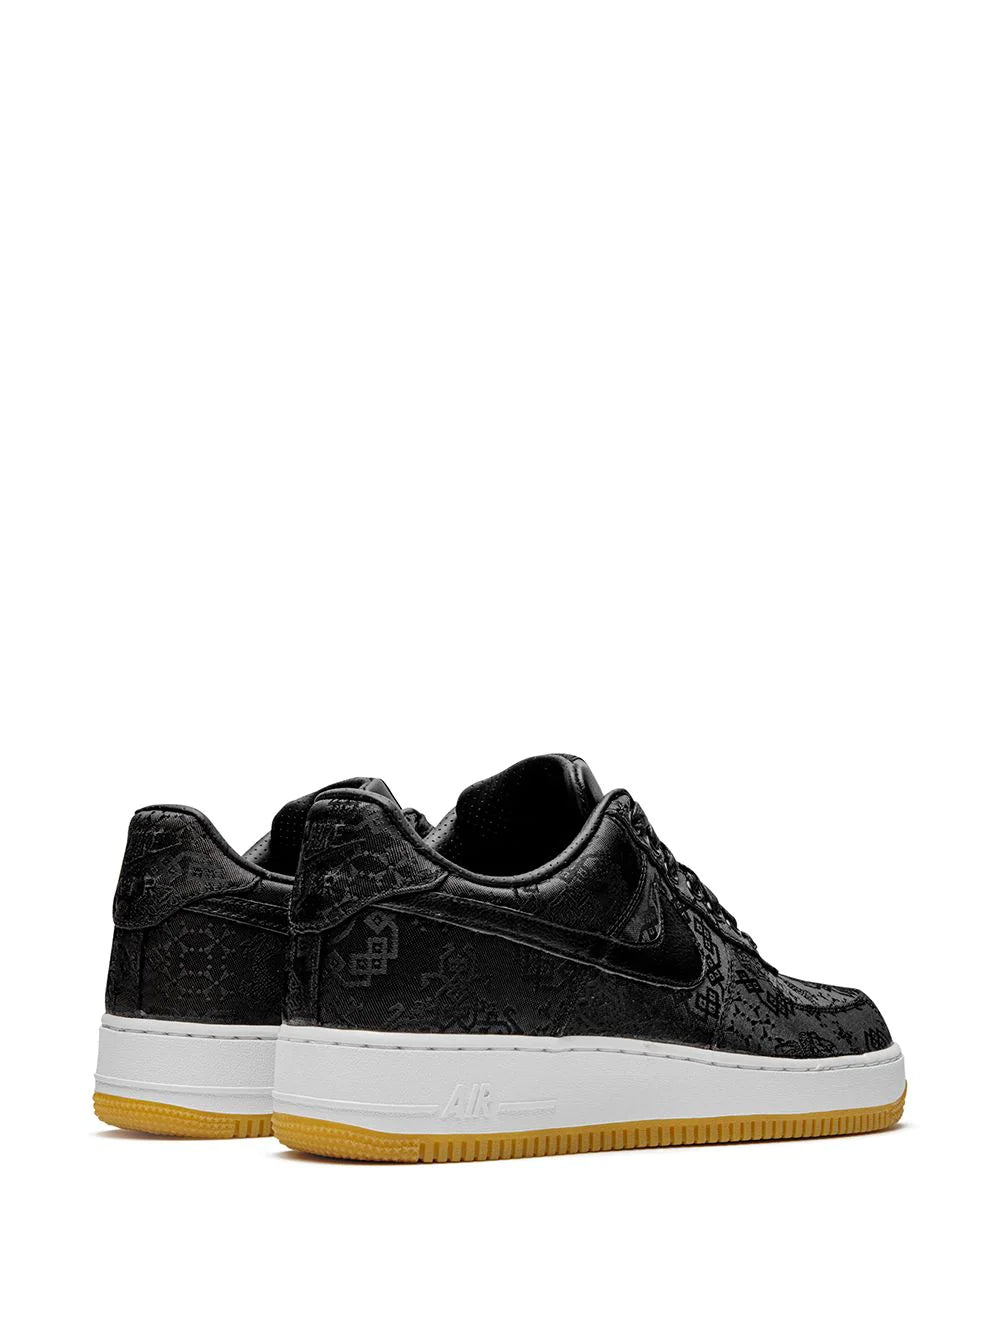 Shoellist | Nike x Fragment x Clot Air Force 1 07 Black Silk sneakers